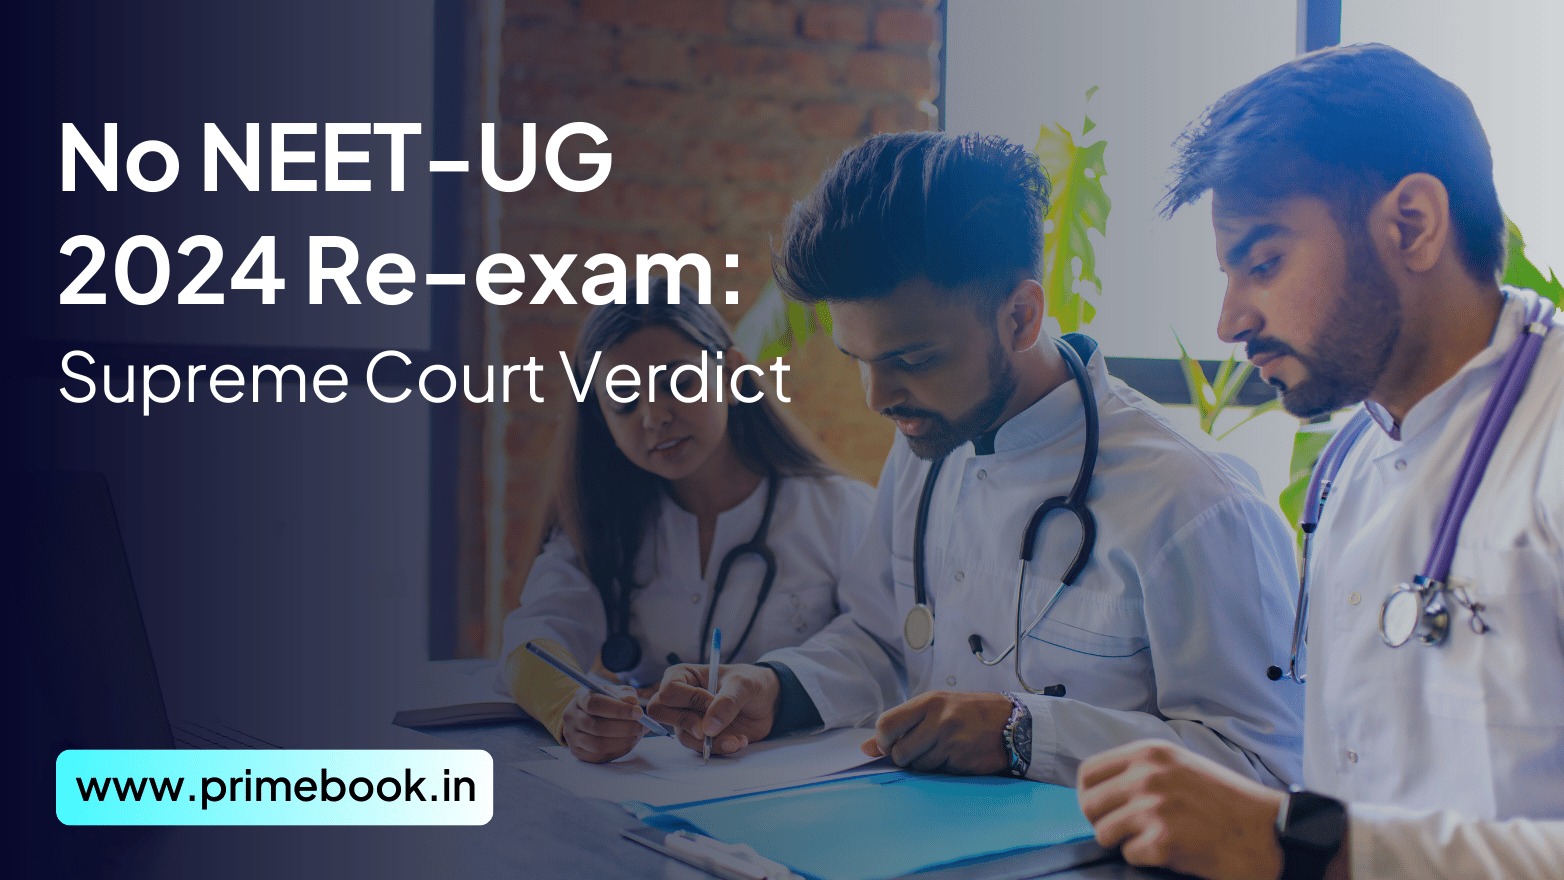 No NEET-UG 2024 Re-exam - Says Supreme Court Verdict